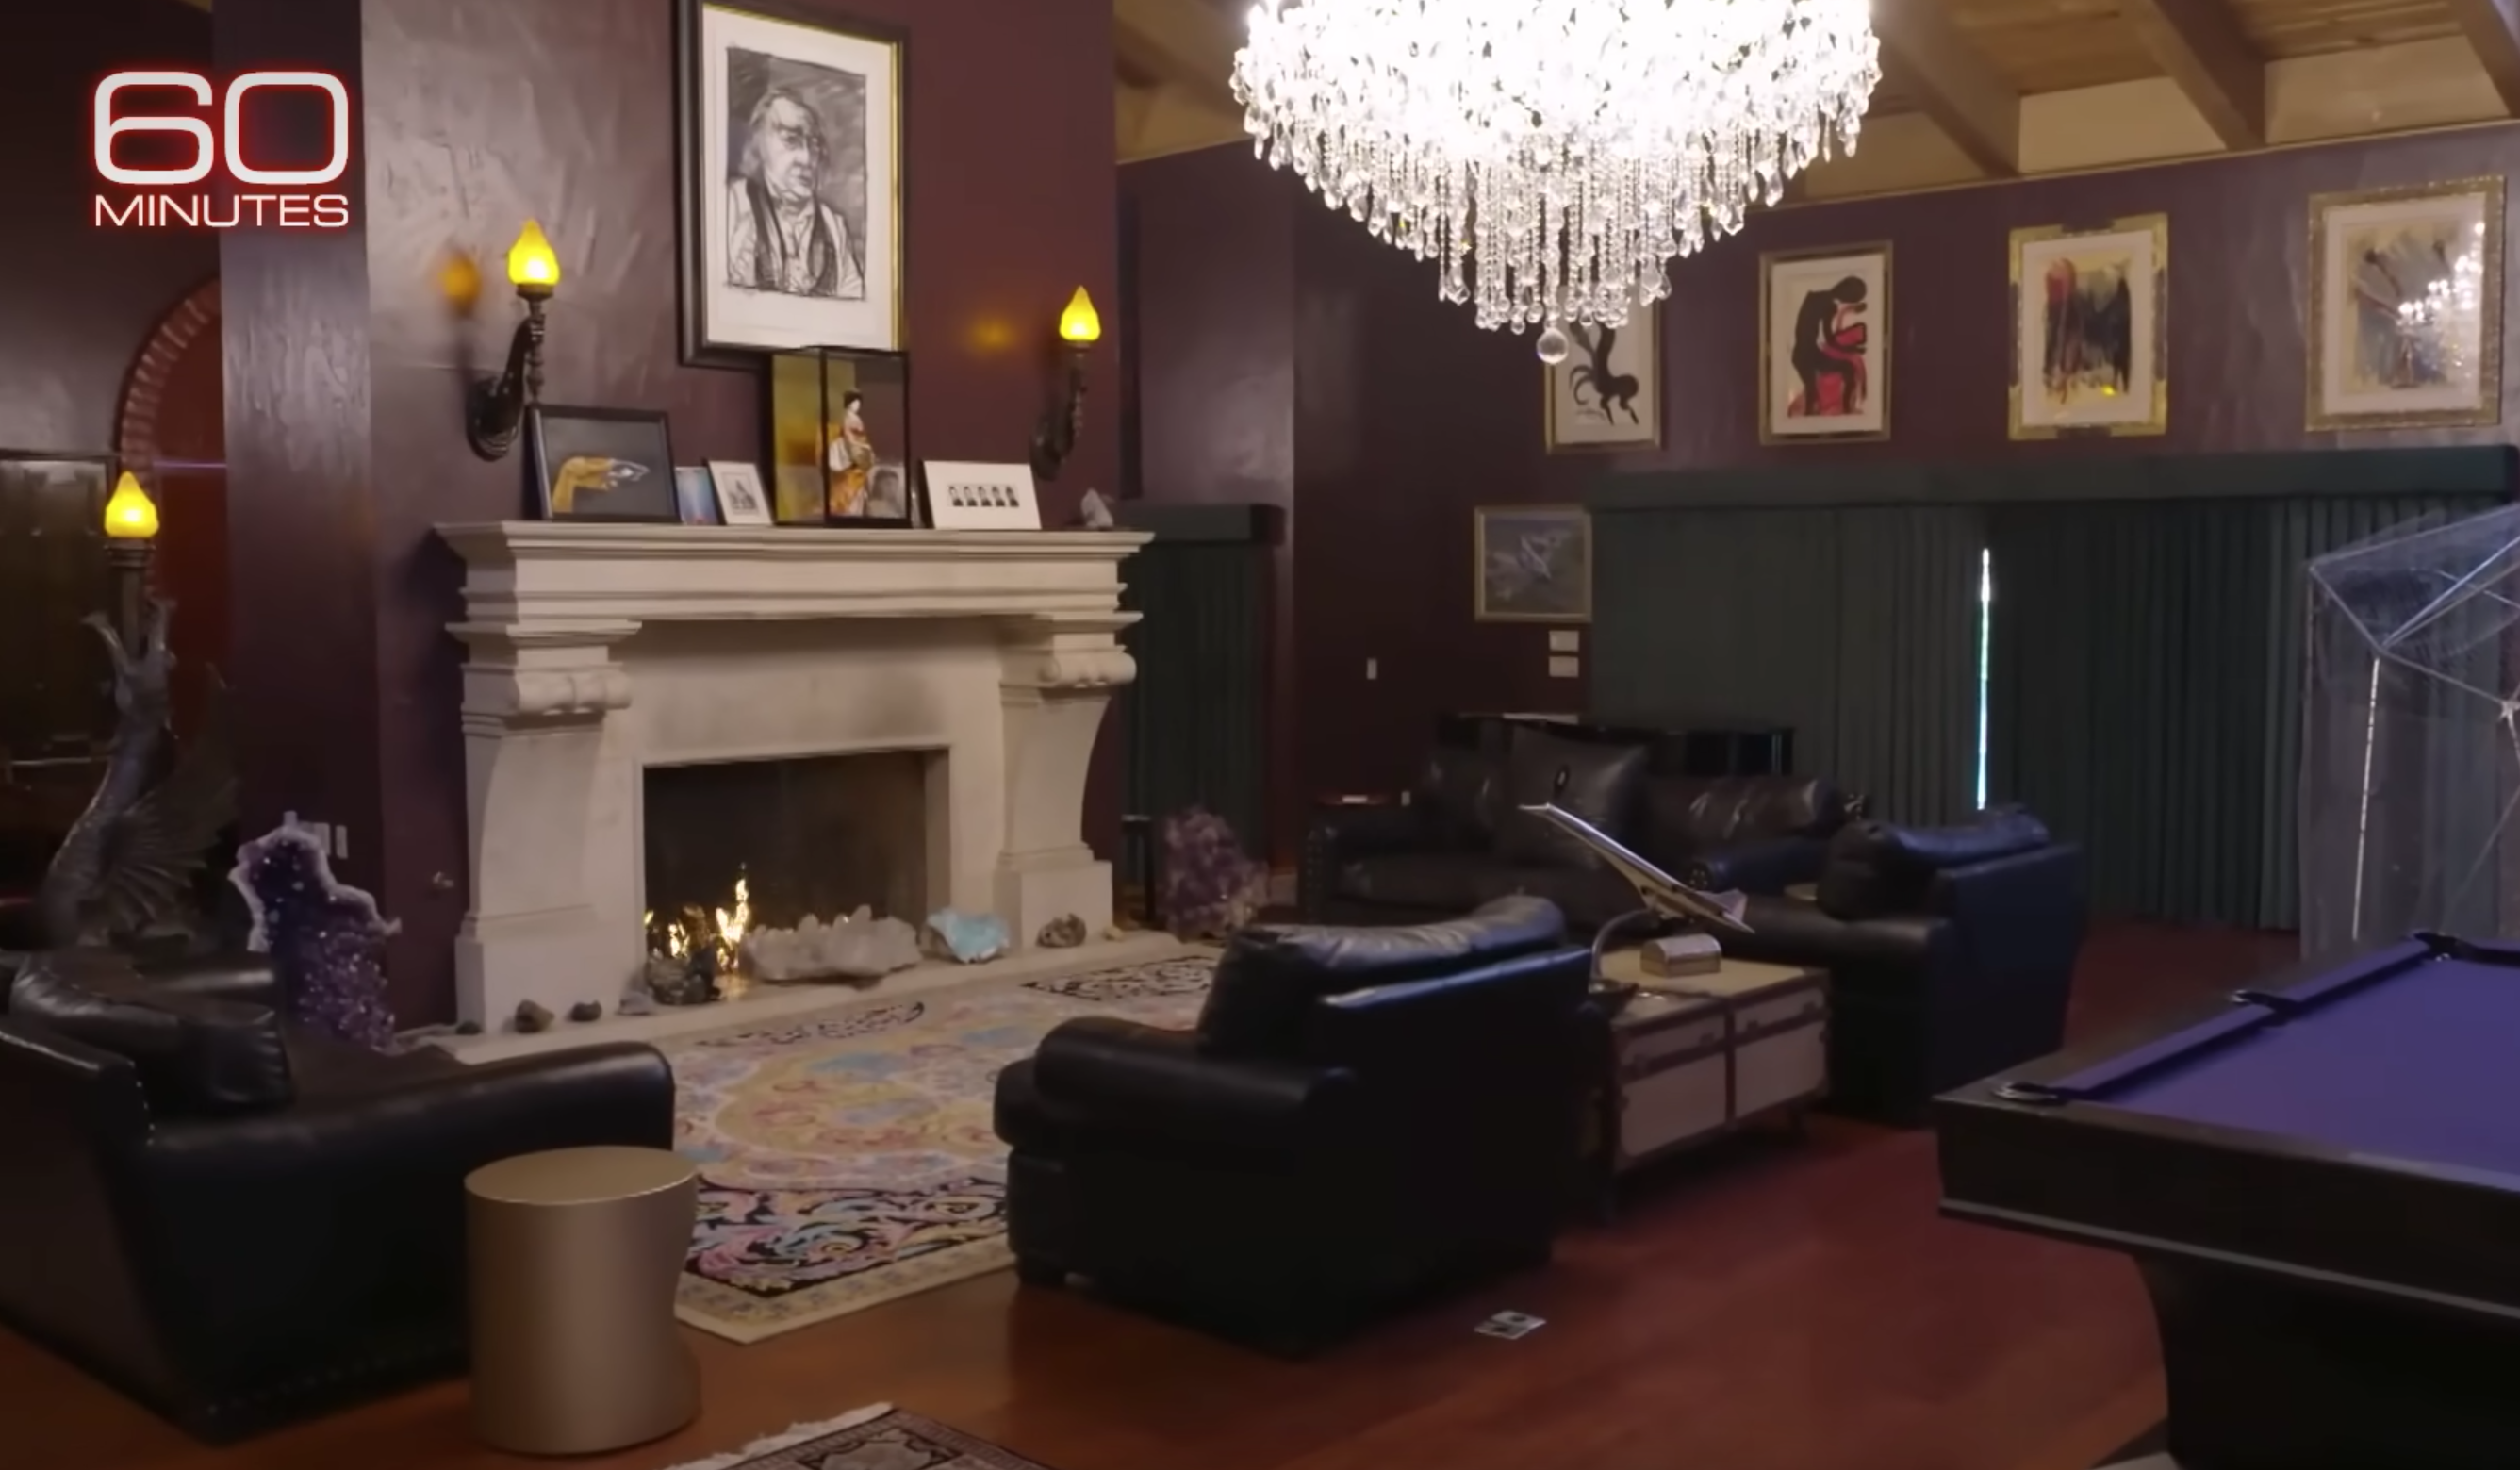 Nicolas Cage's living room. | Source: YouTube.com/60 Minutes